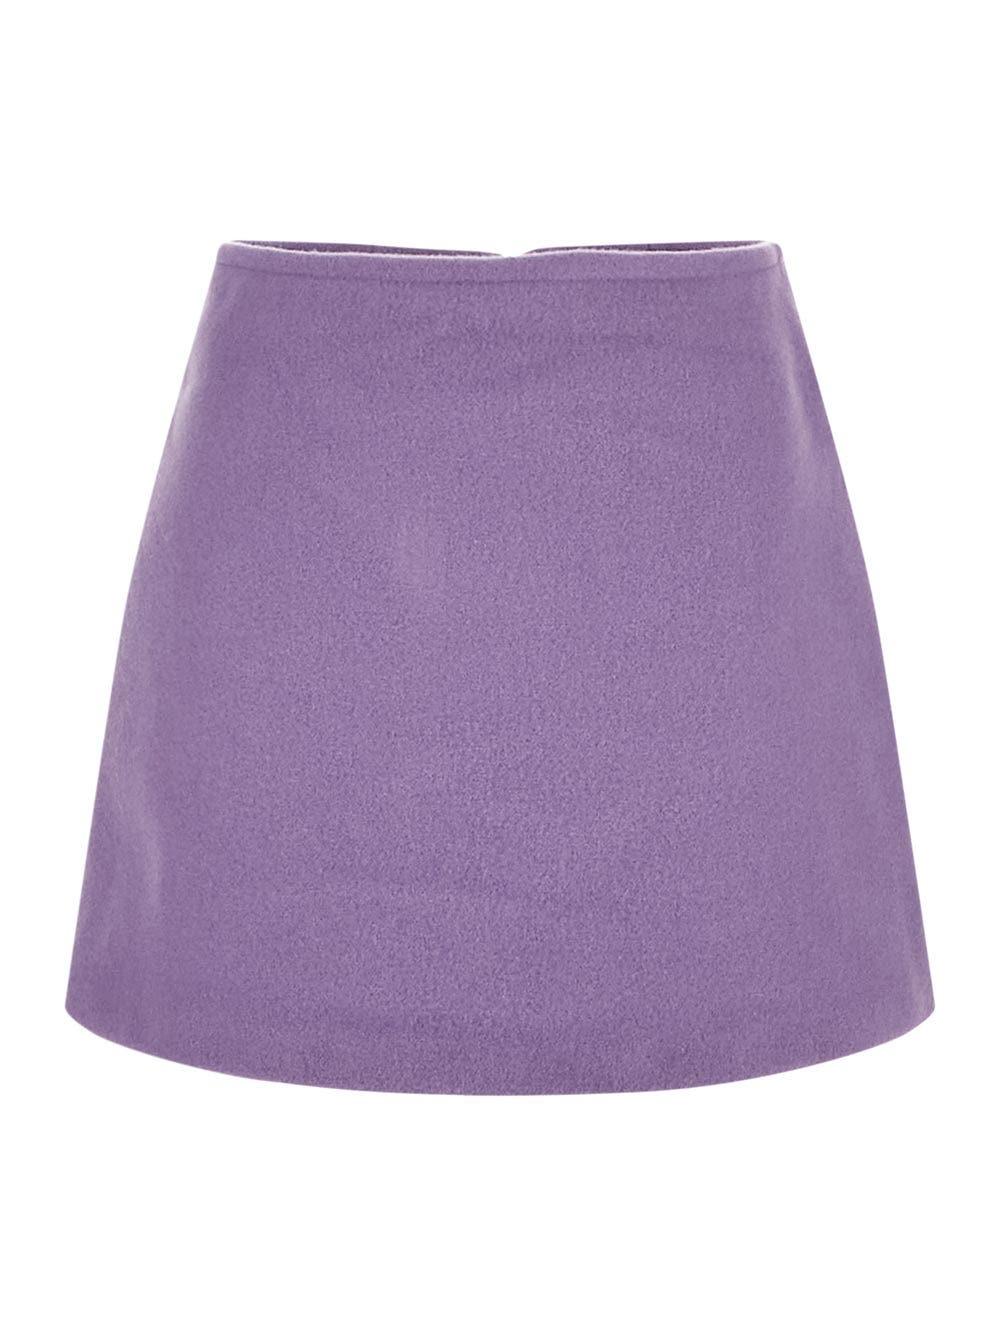 Patou Wool Mini Skirt in Purple | Lyst